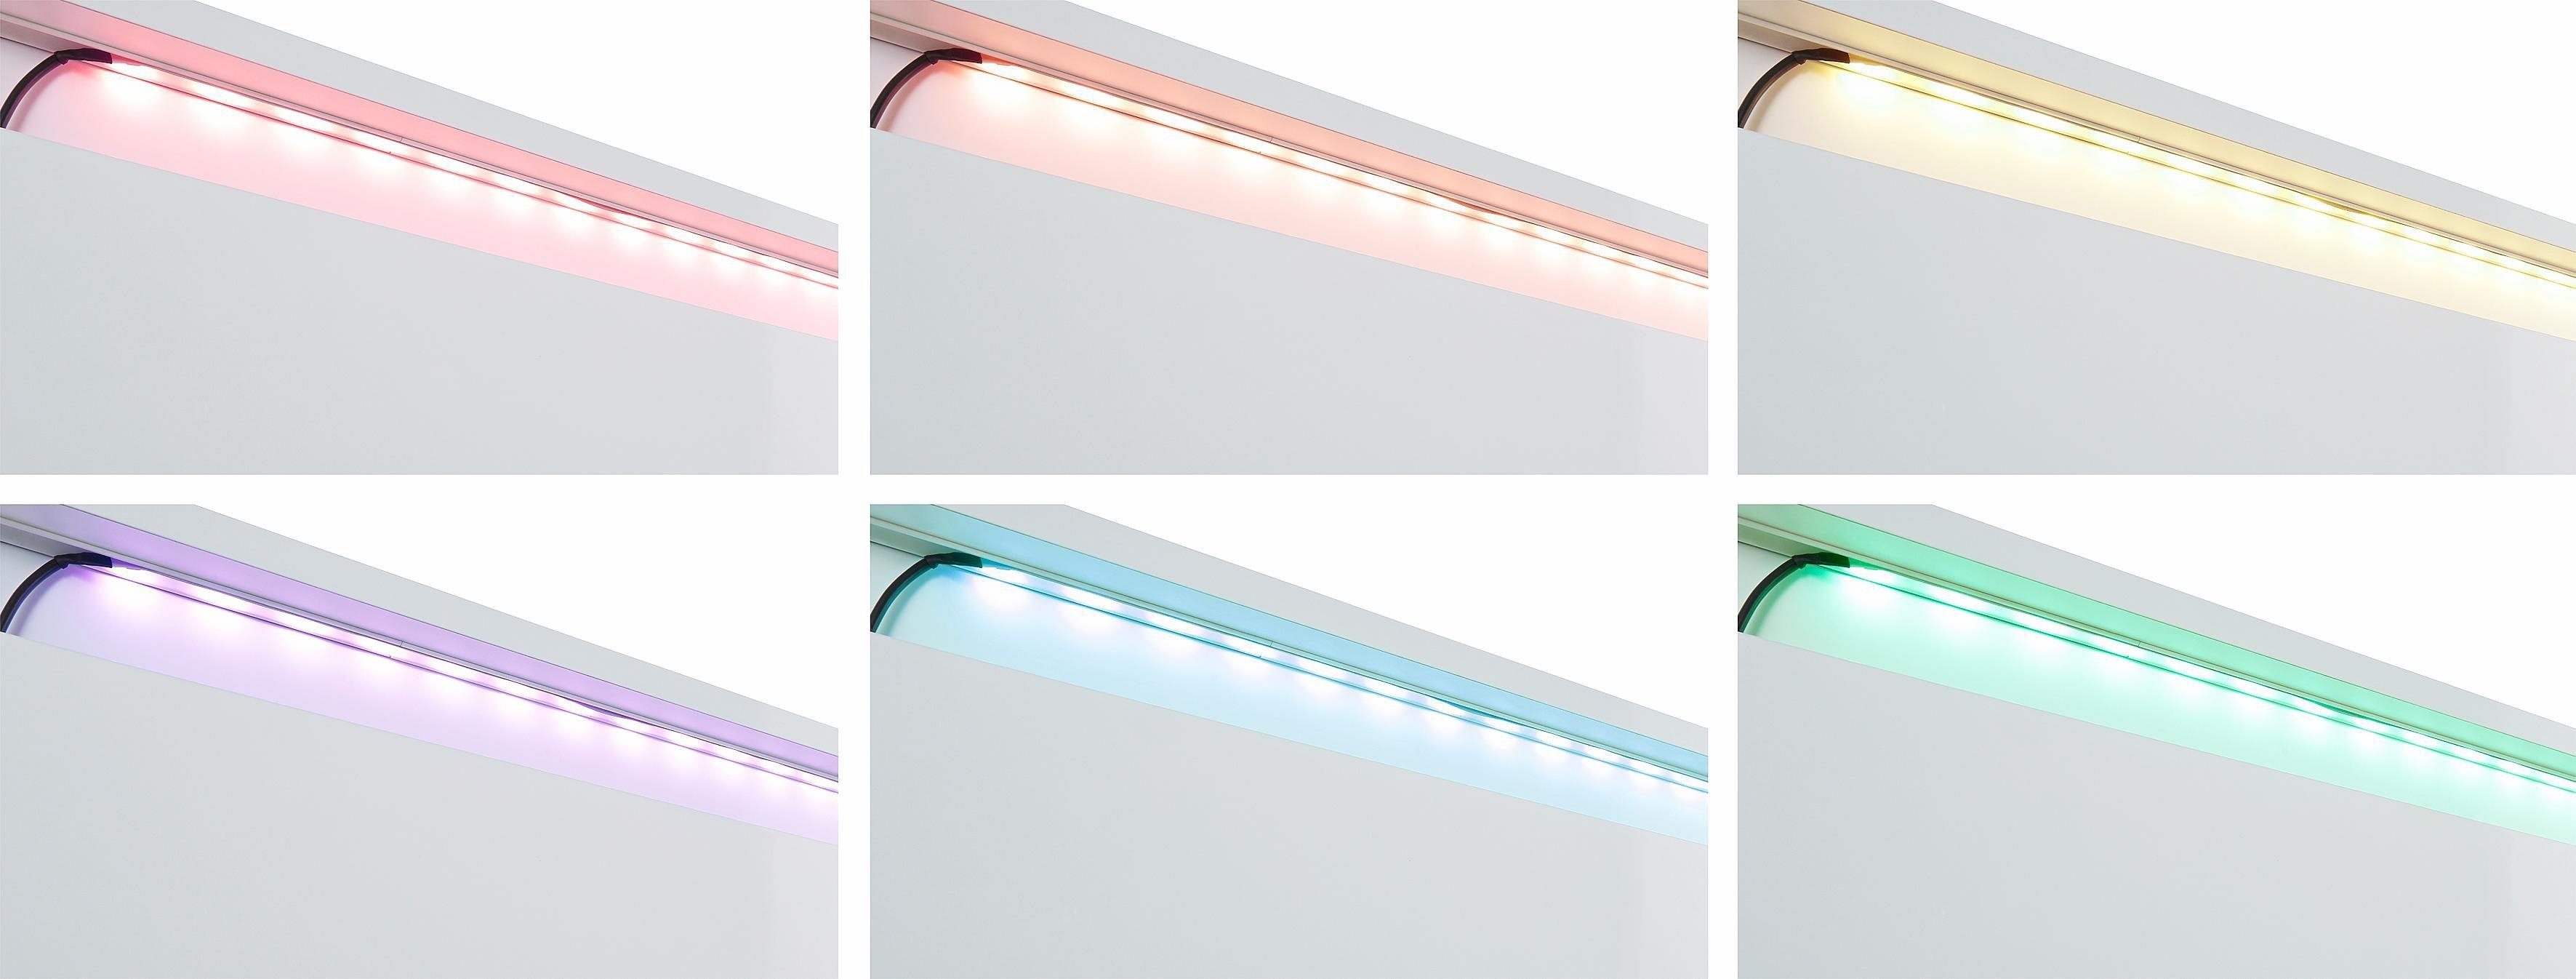 LED Schrankinnenraumbeleuchtung, LED fest integriert, Farbwechsler, mit Knopf-Farbsteuerung | Unterbauleuchten